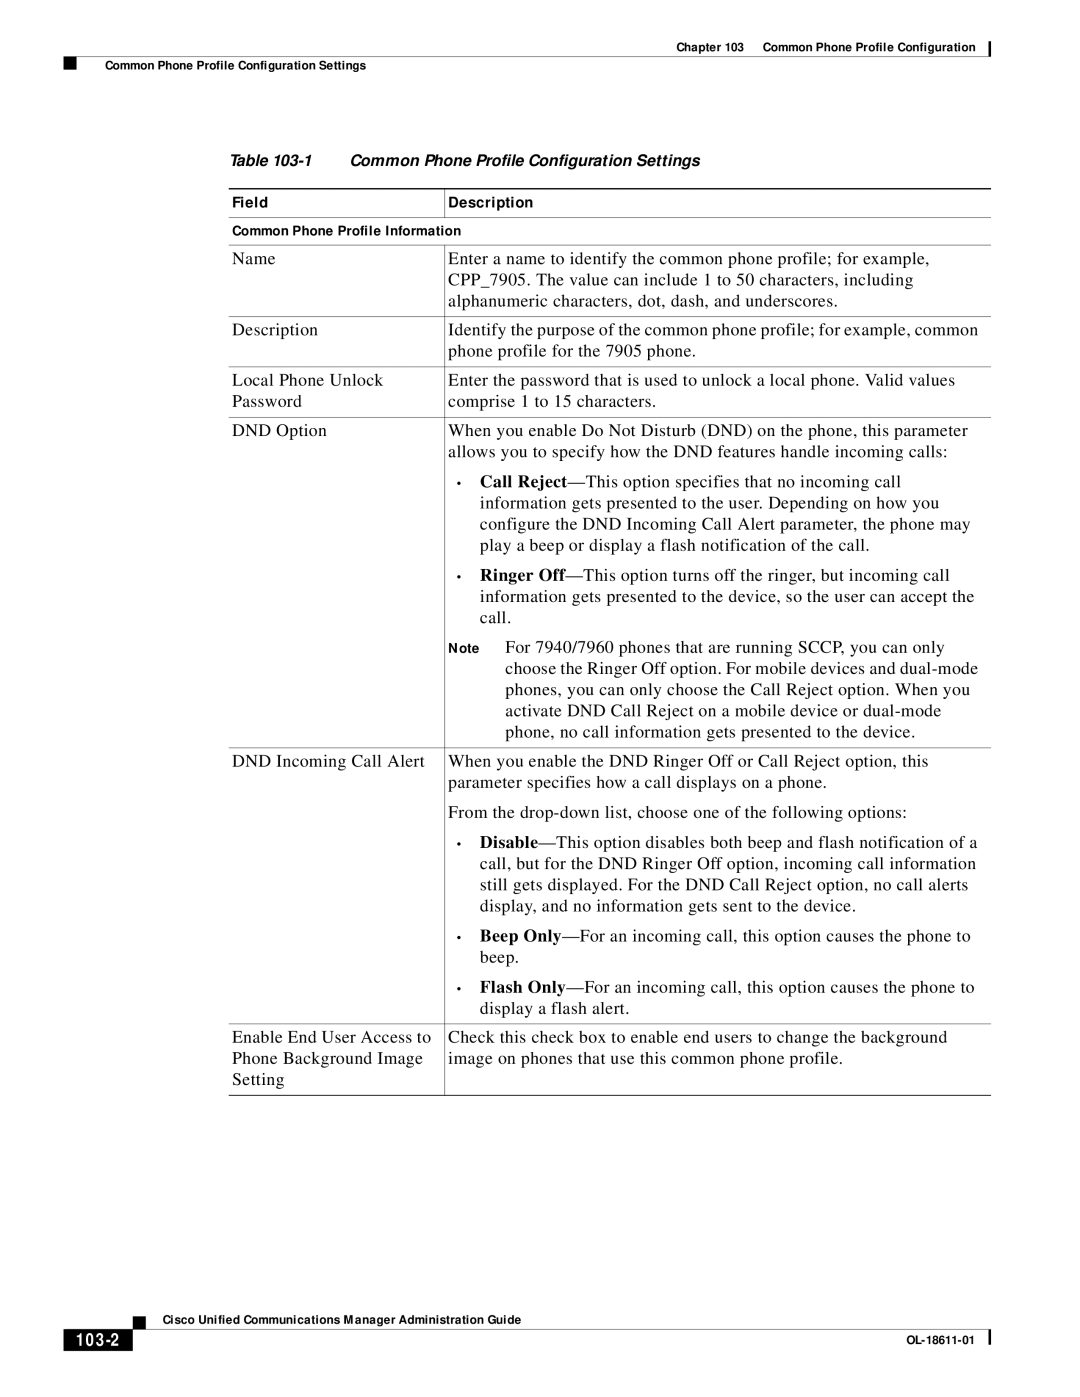 Cisco Systems OL-18611-01 manual Field Description, 103-2 